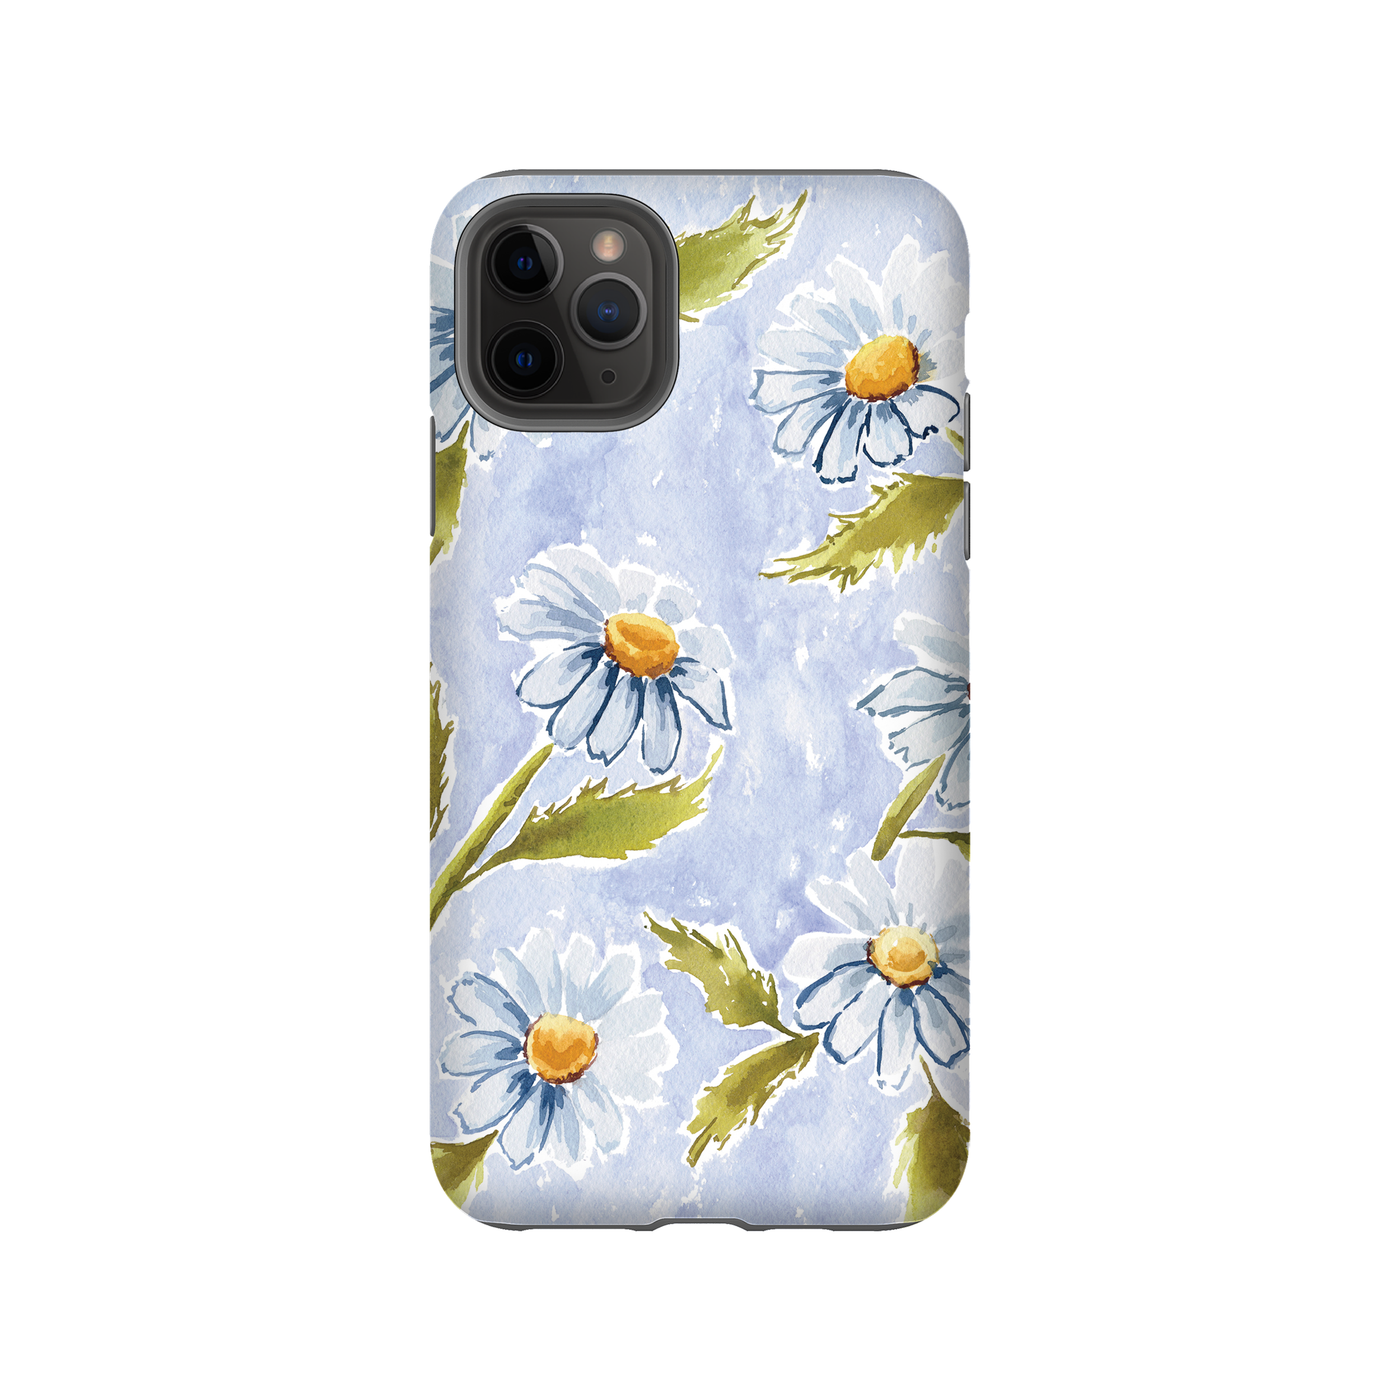 iPhone case in daisies